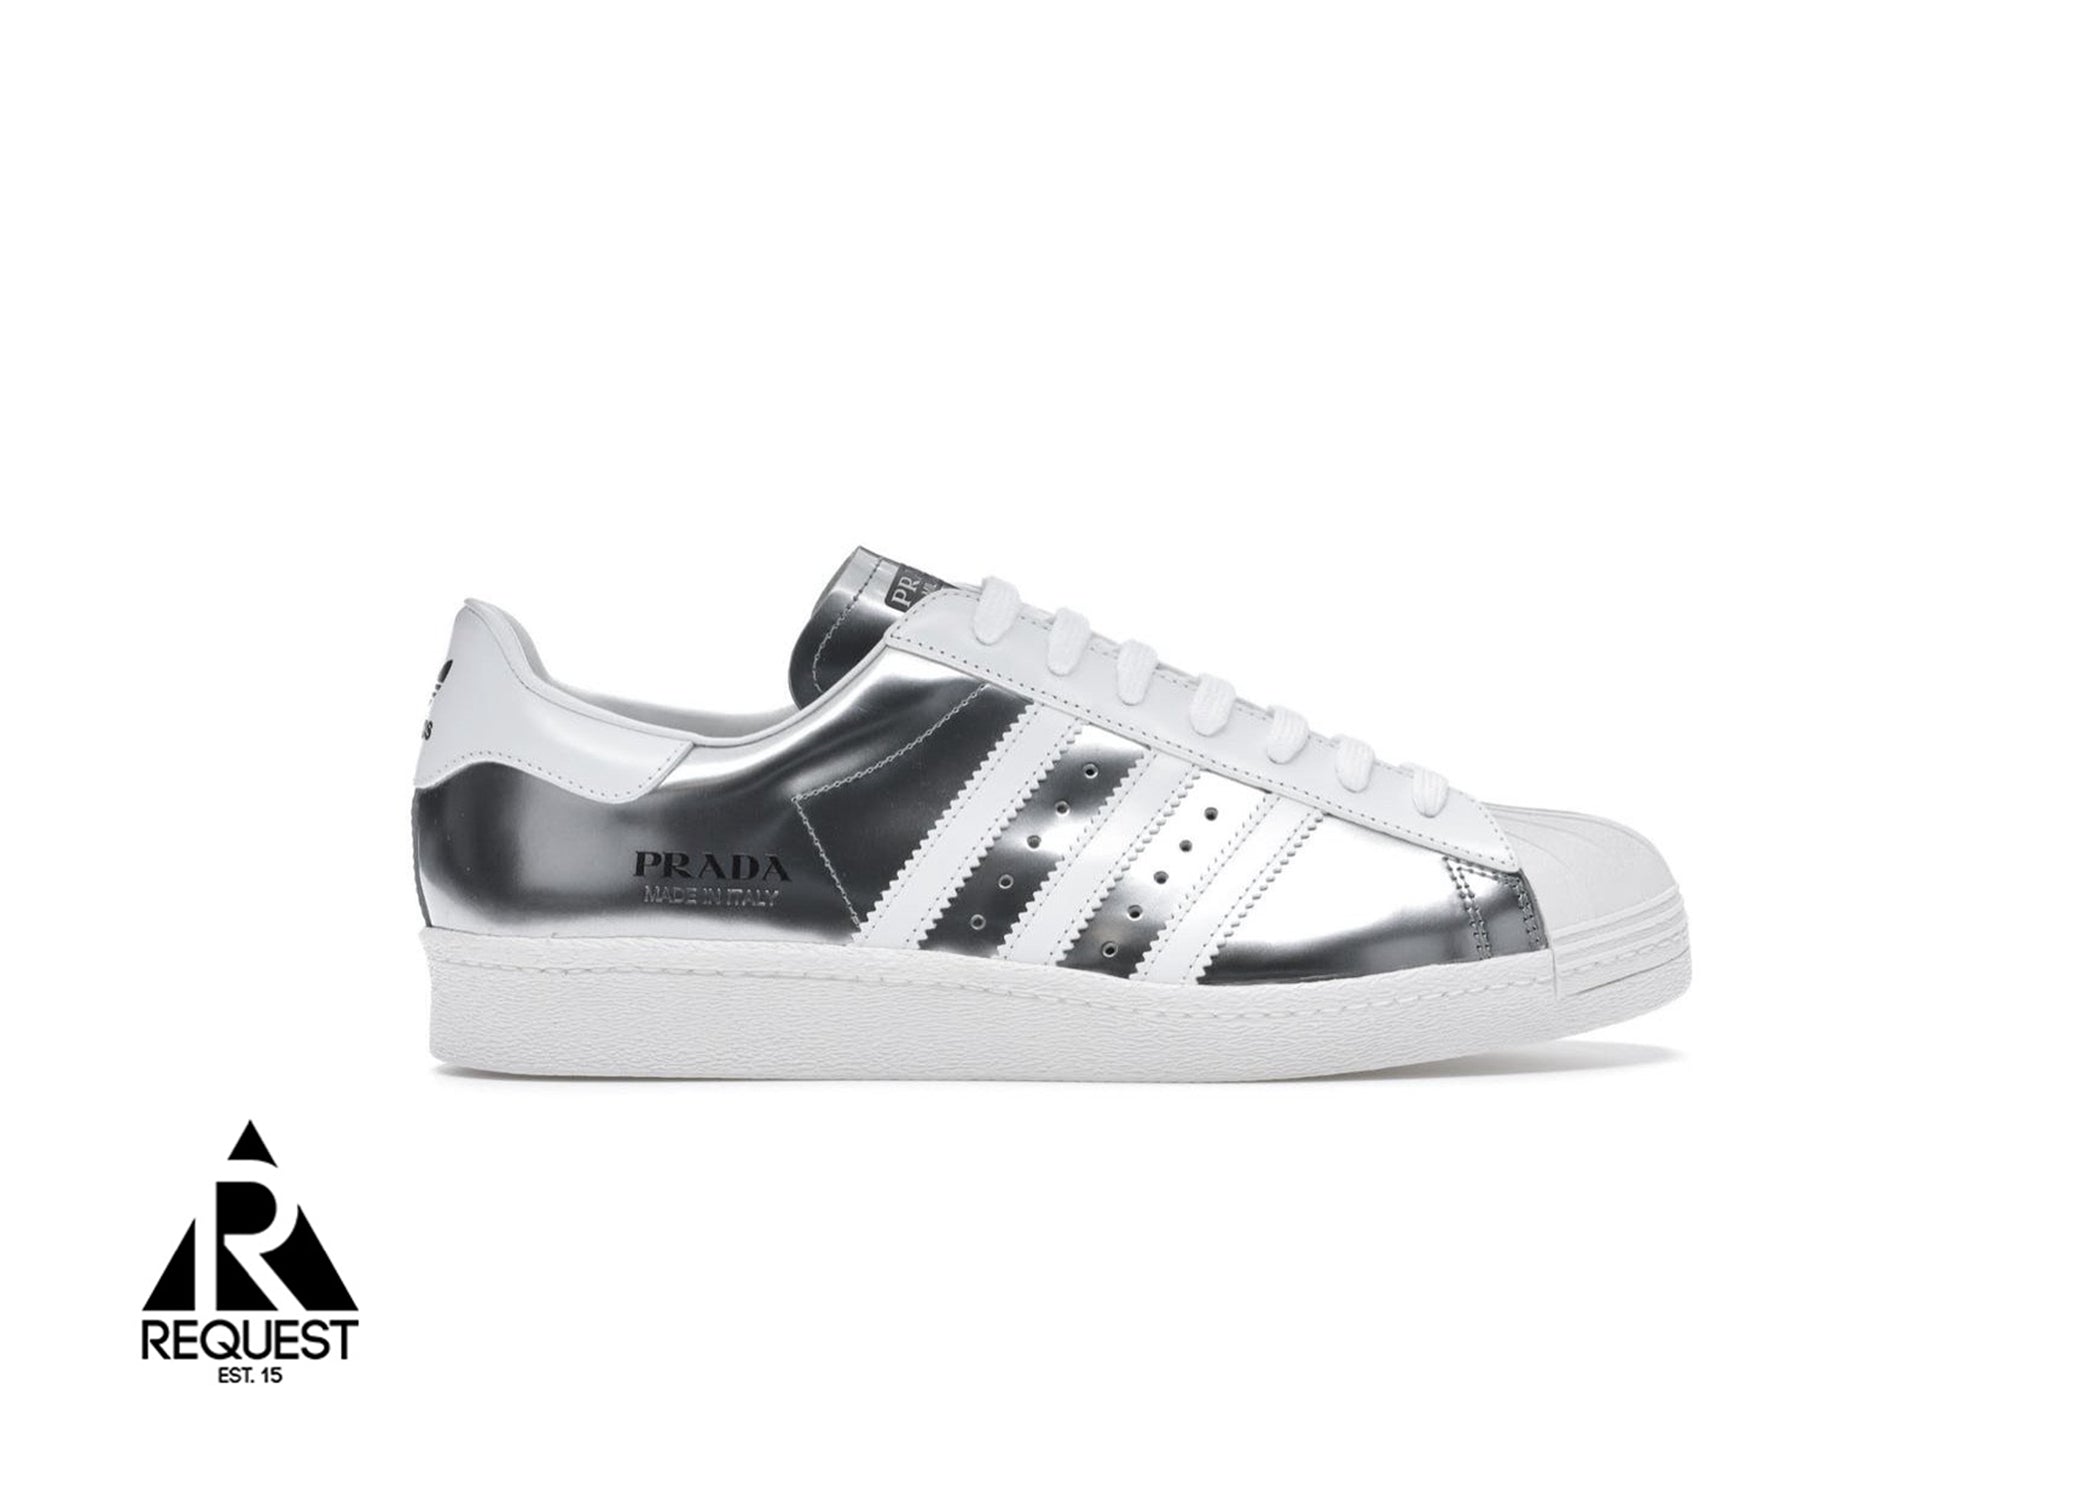 Adidas Superstar “Prada Silver”